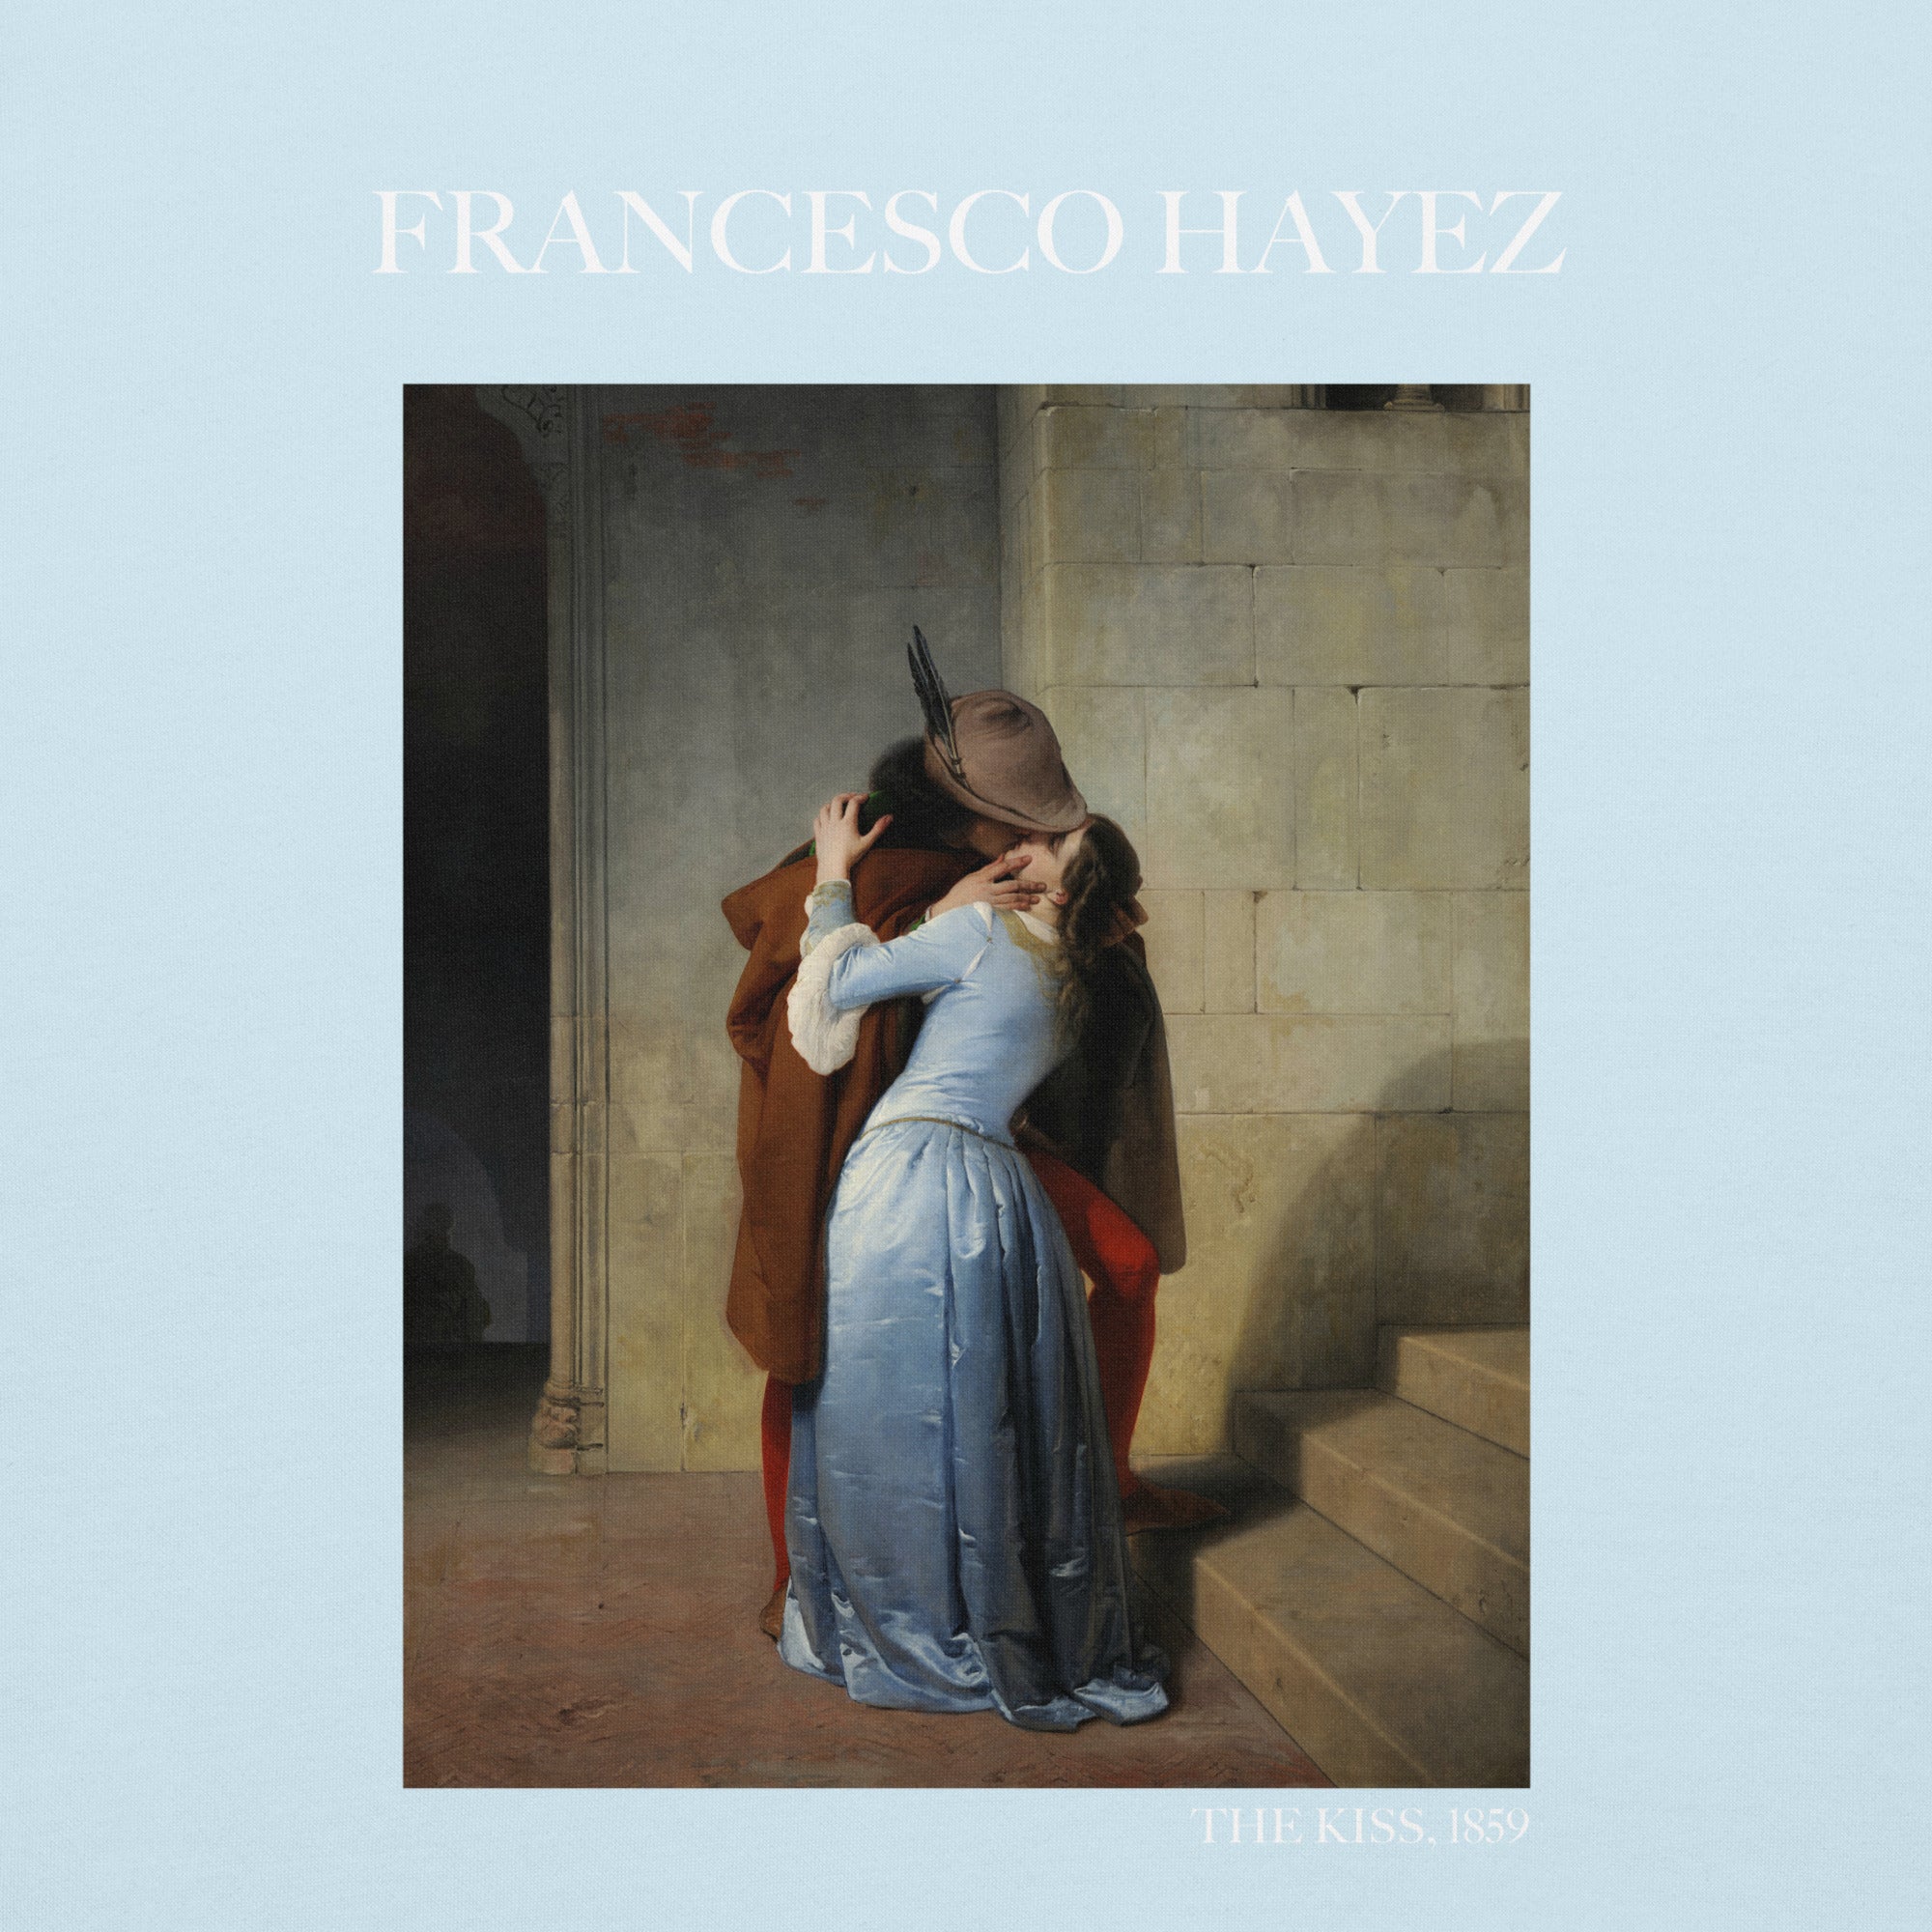 Francesco Hayez 'The Kiss' Famous Painting Hoodie | Unisex Premium Art Hoodie